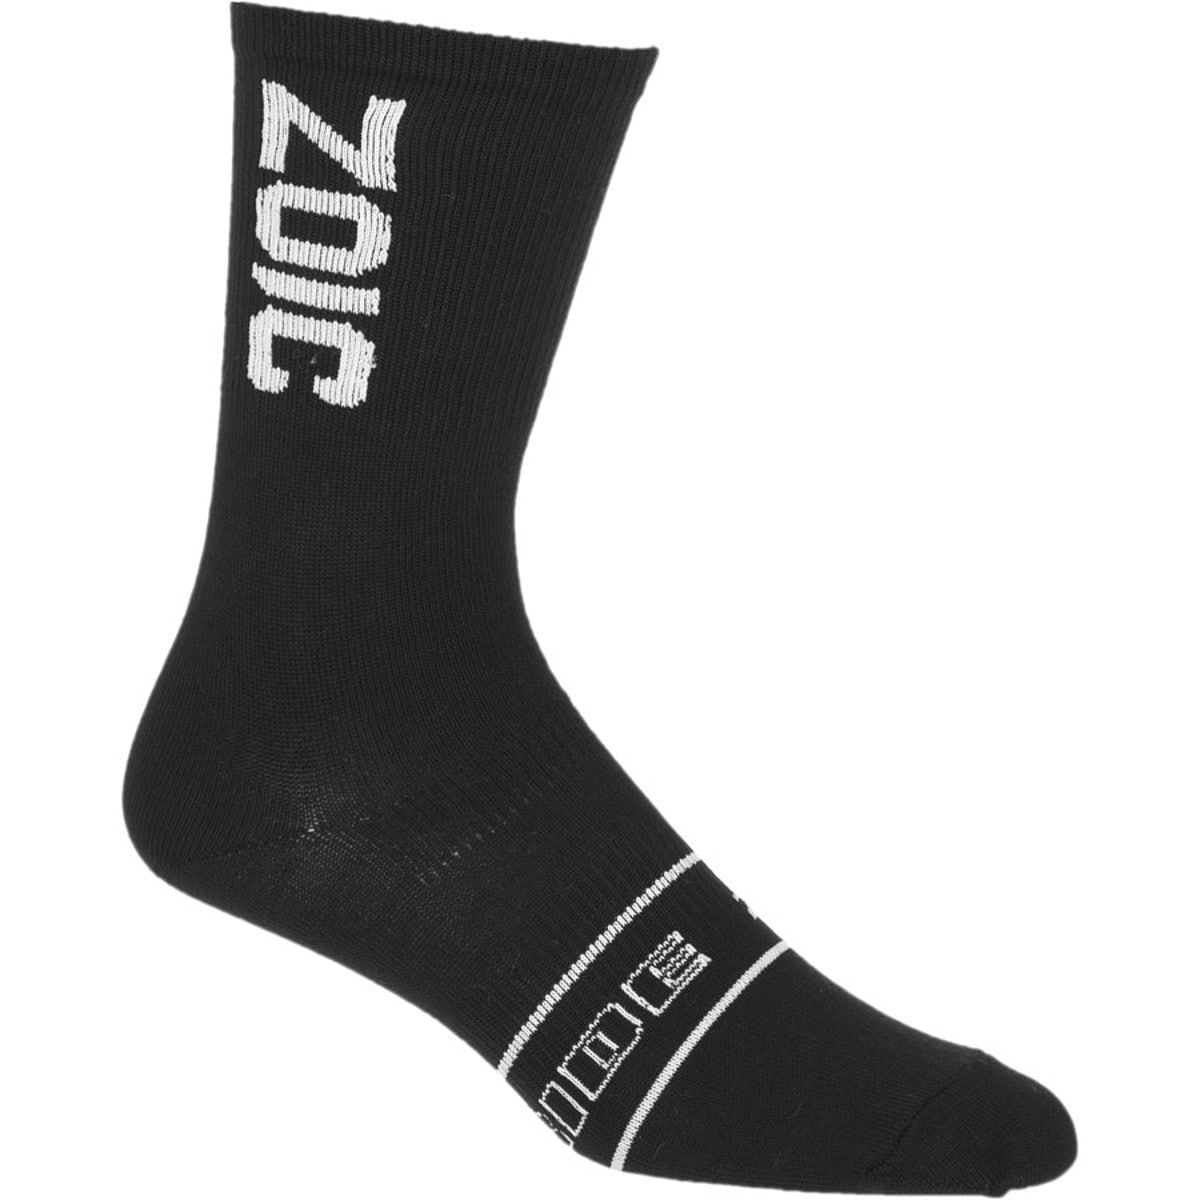 ZOIC Long Sock Men's